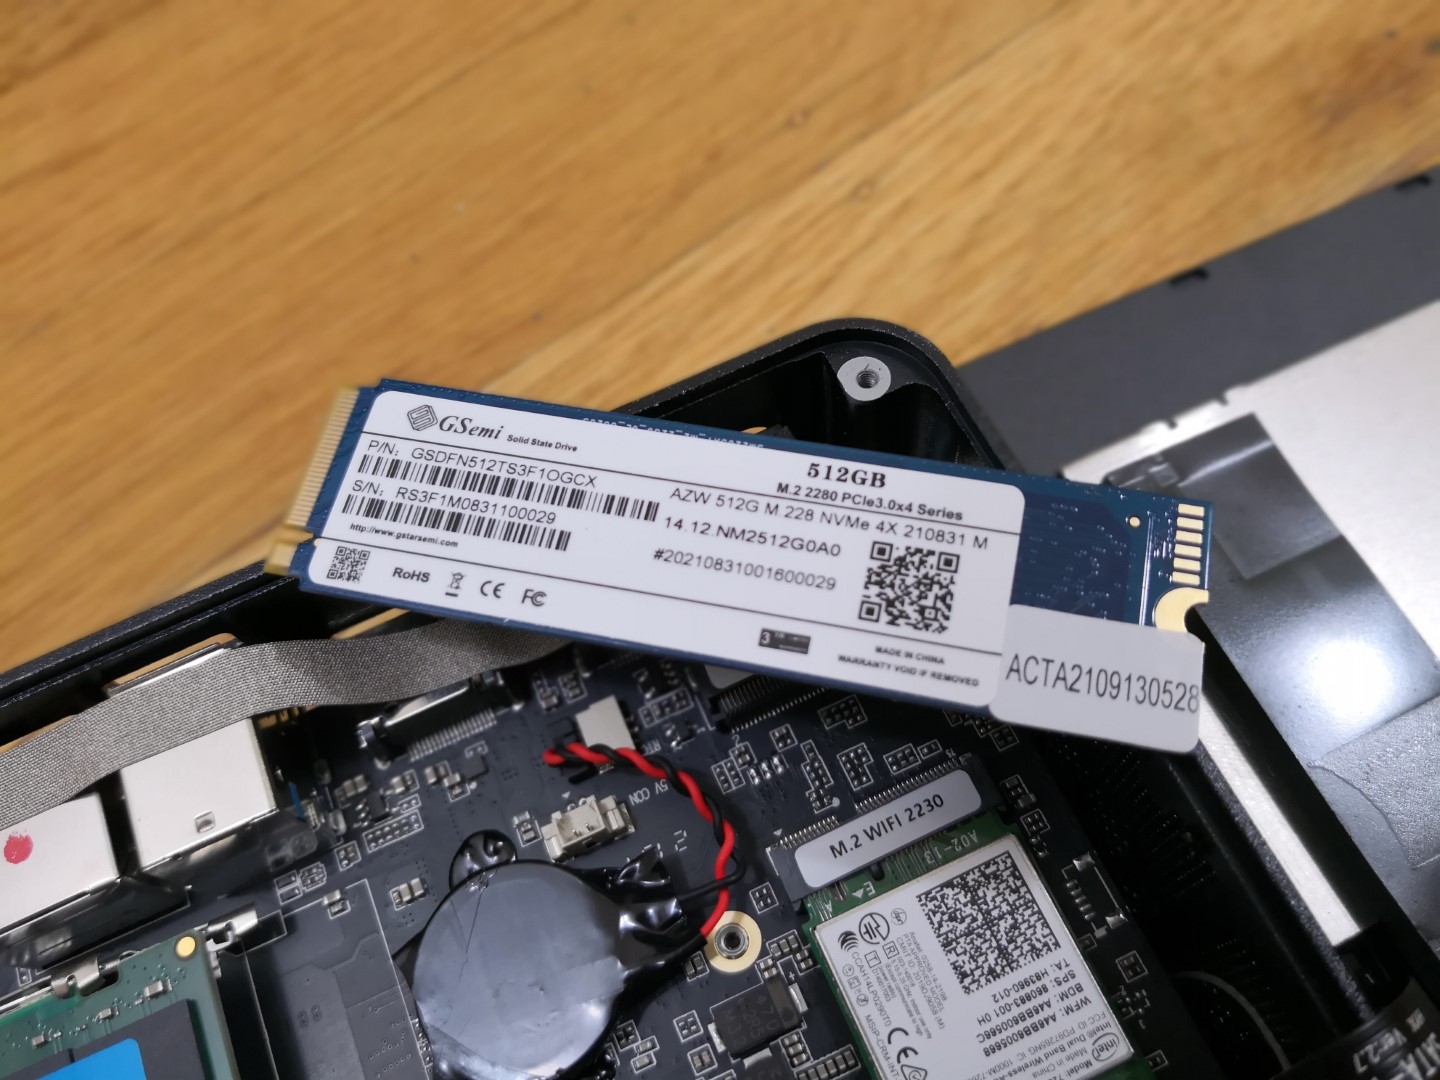 Kioxia Updates M.2 2230 SSD Lineup With BG5 Series: Adding PCIe